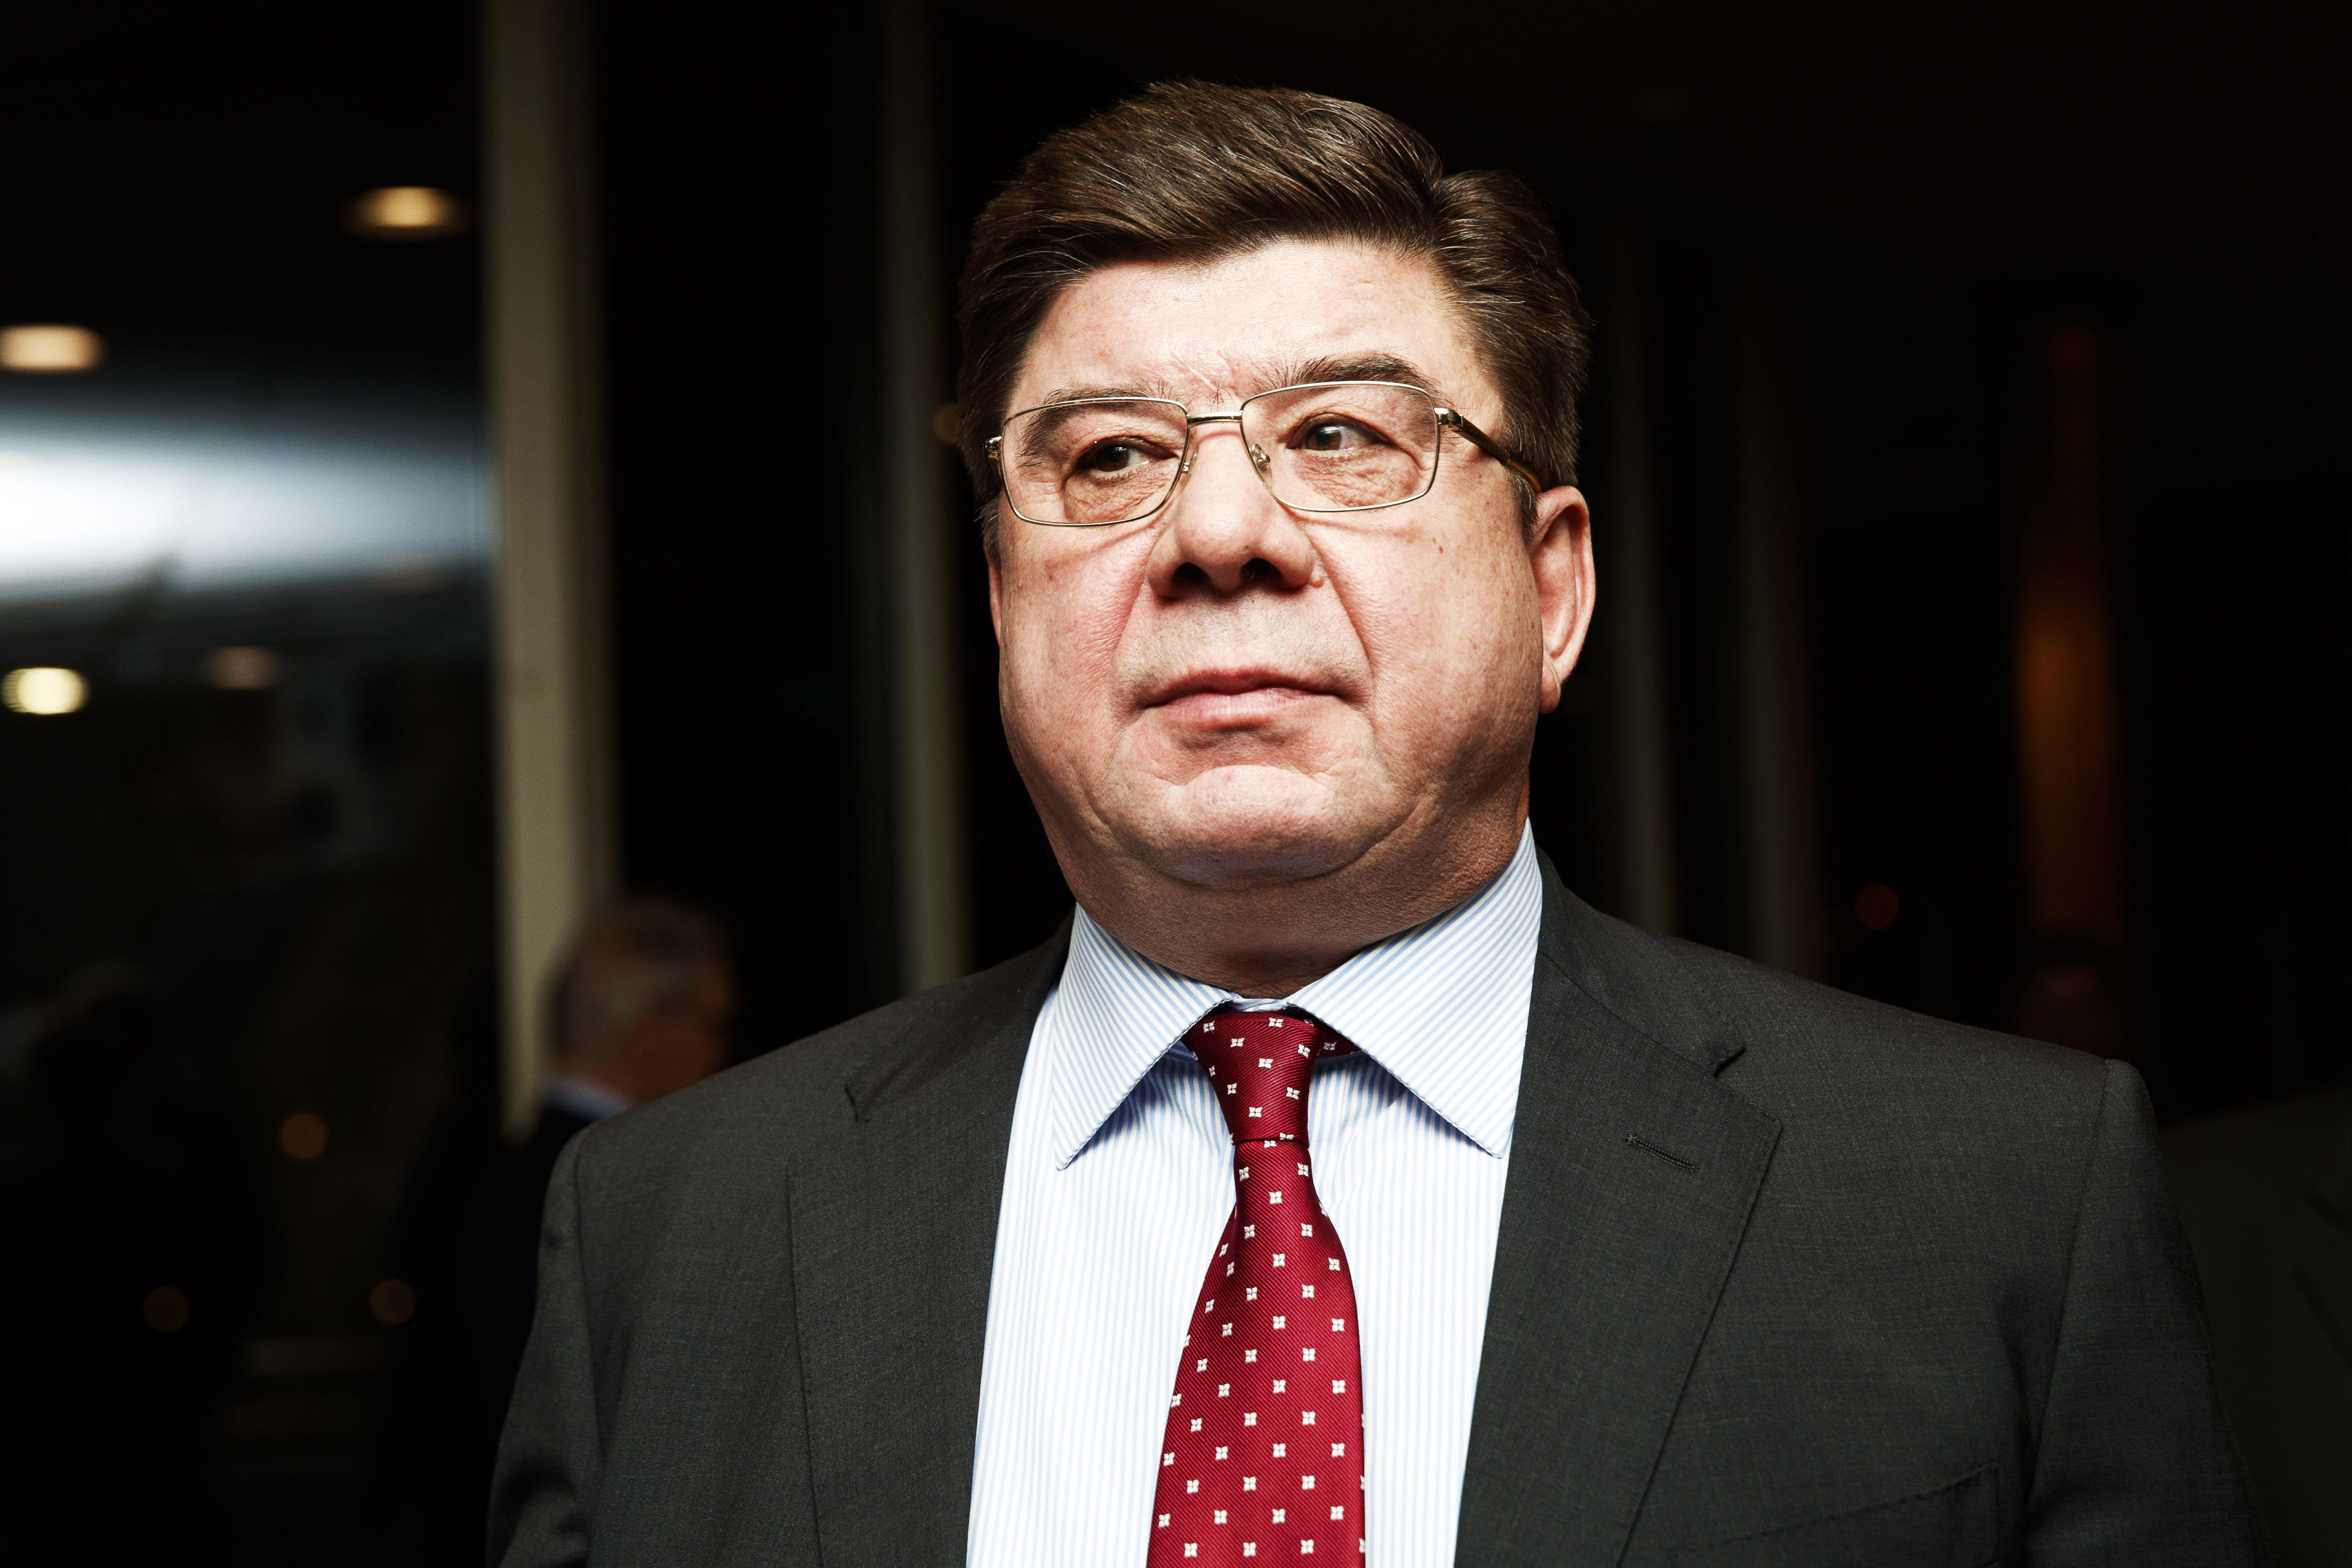 Finland summons the Russian ambassador because of apparent referendums and Ukrainian alliances